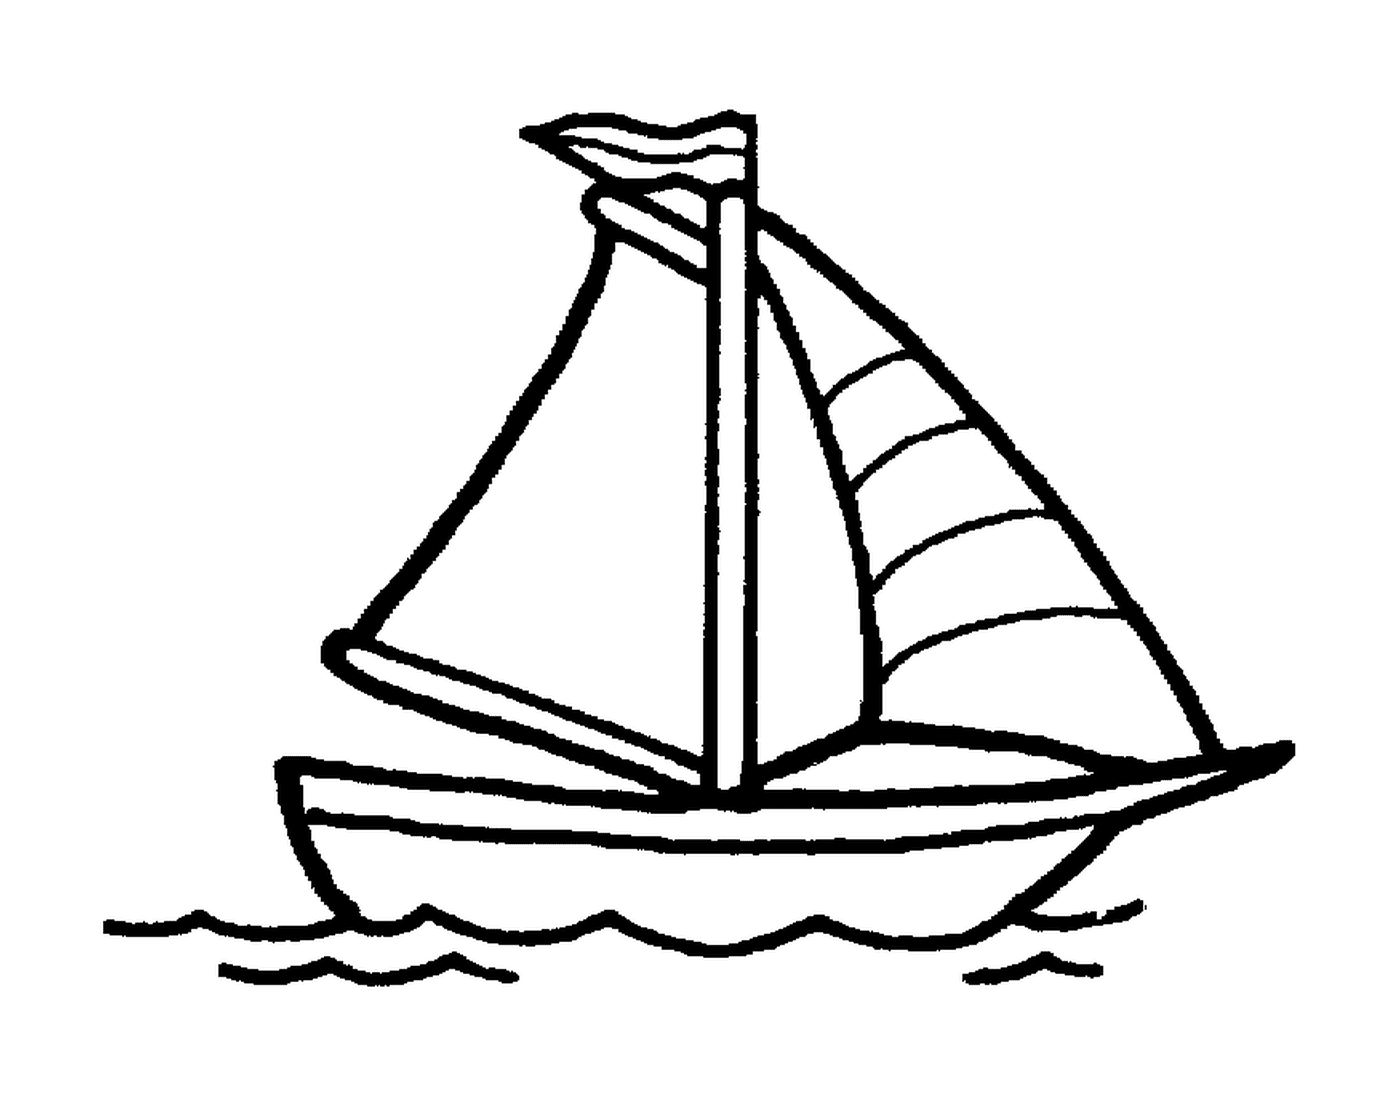  Una piccola nave è mostrata 